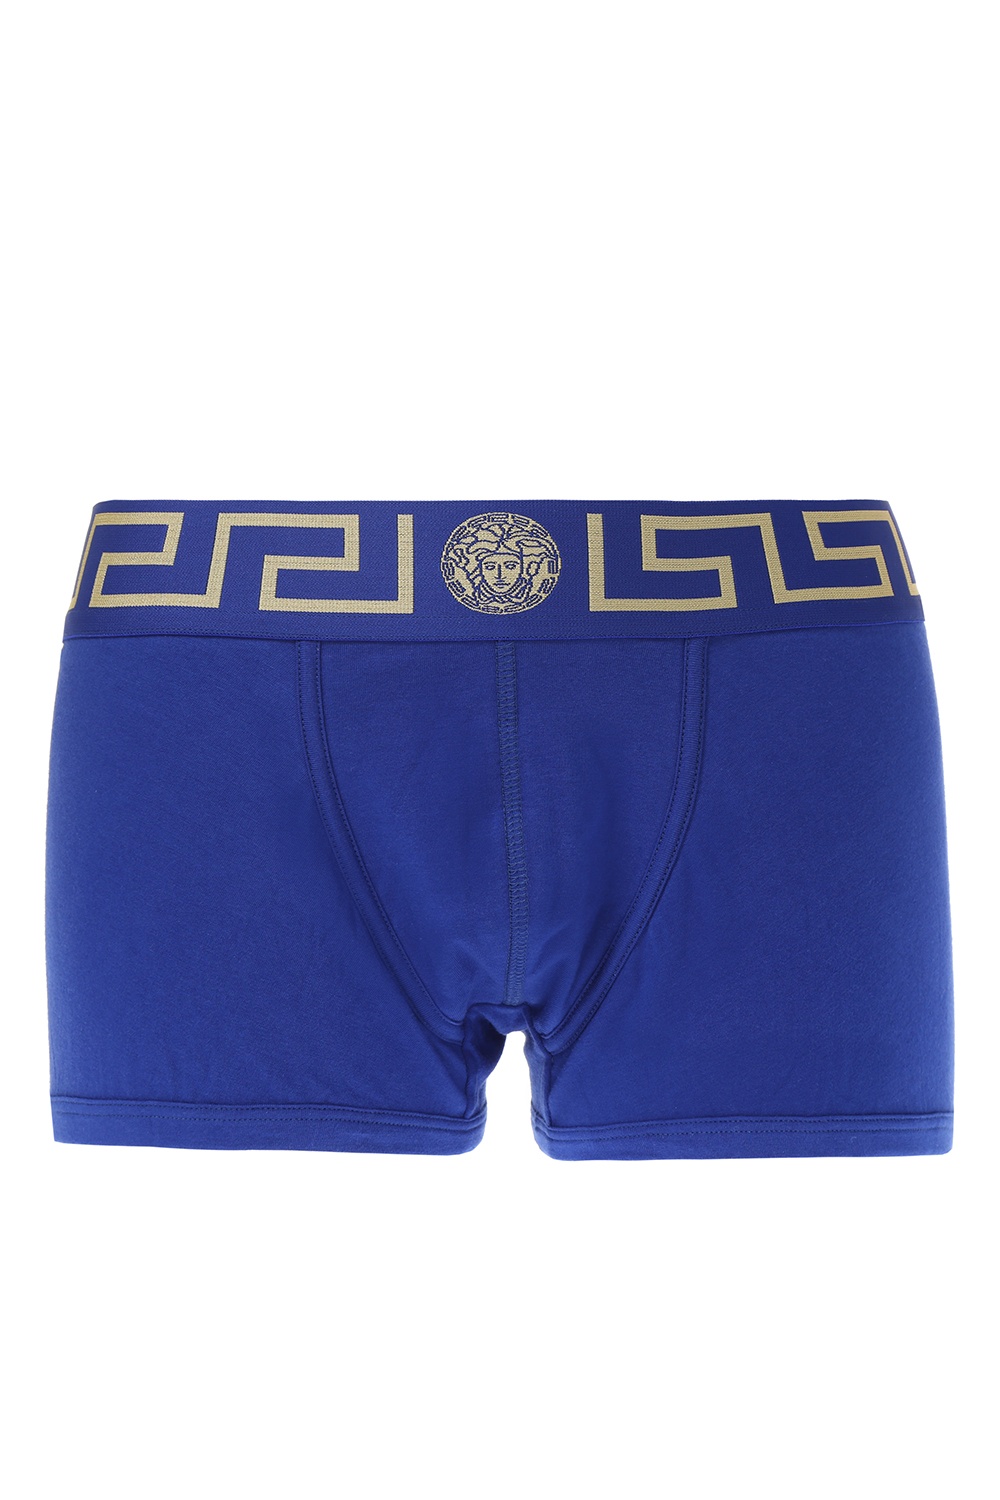 versace boxers blue